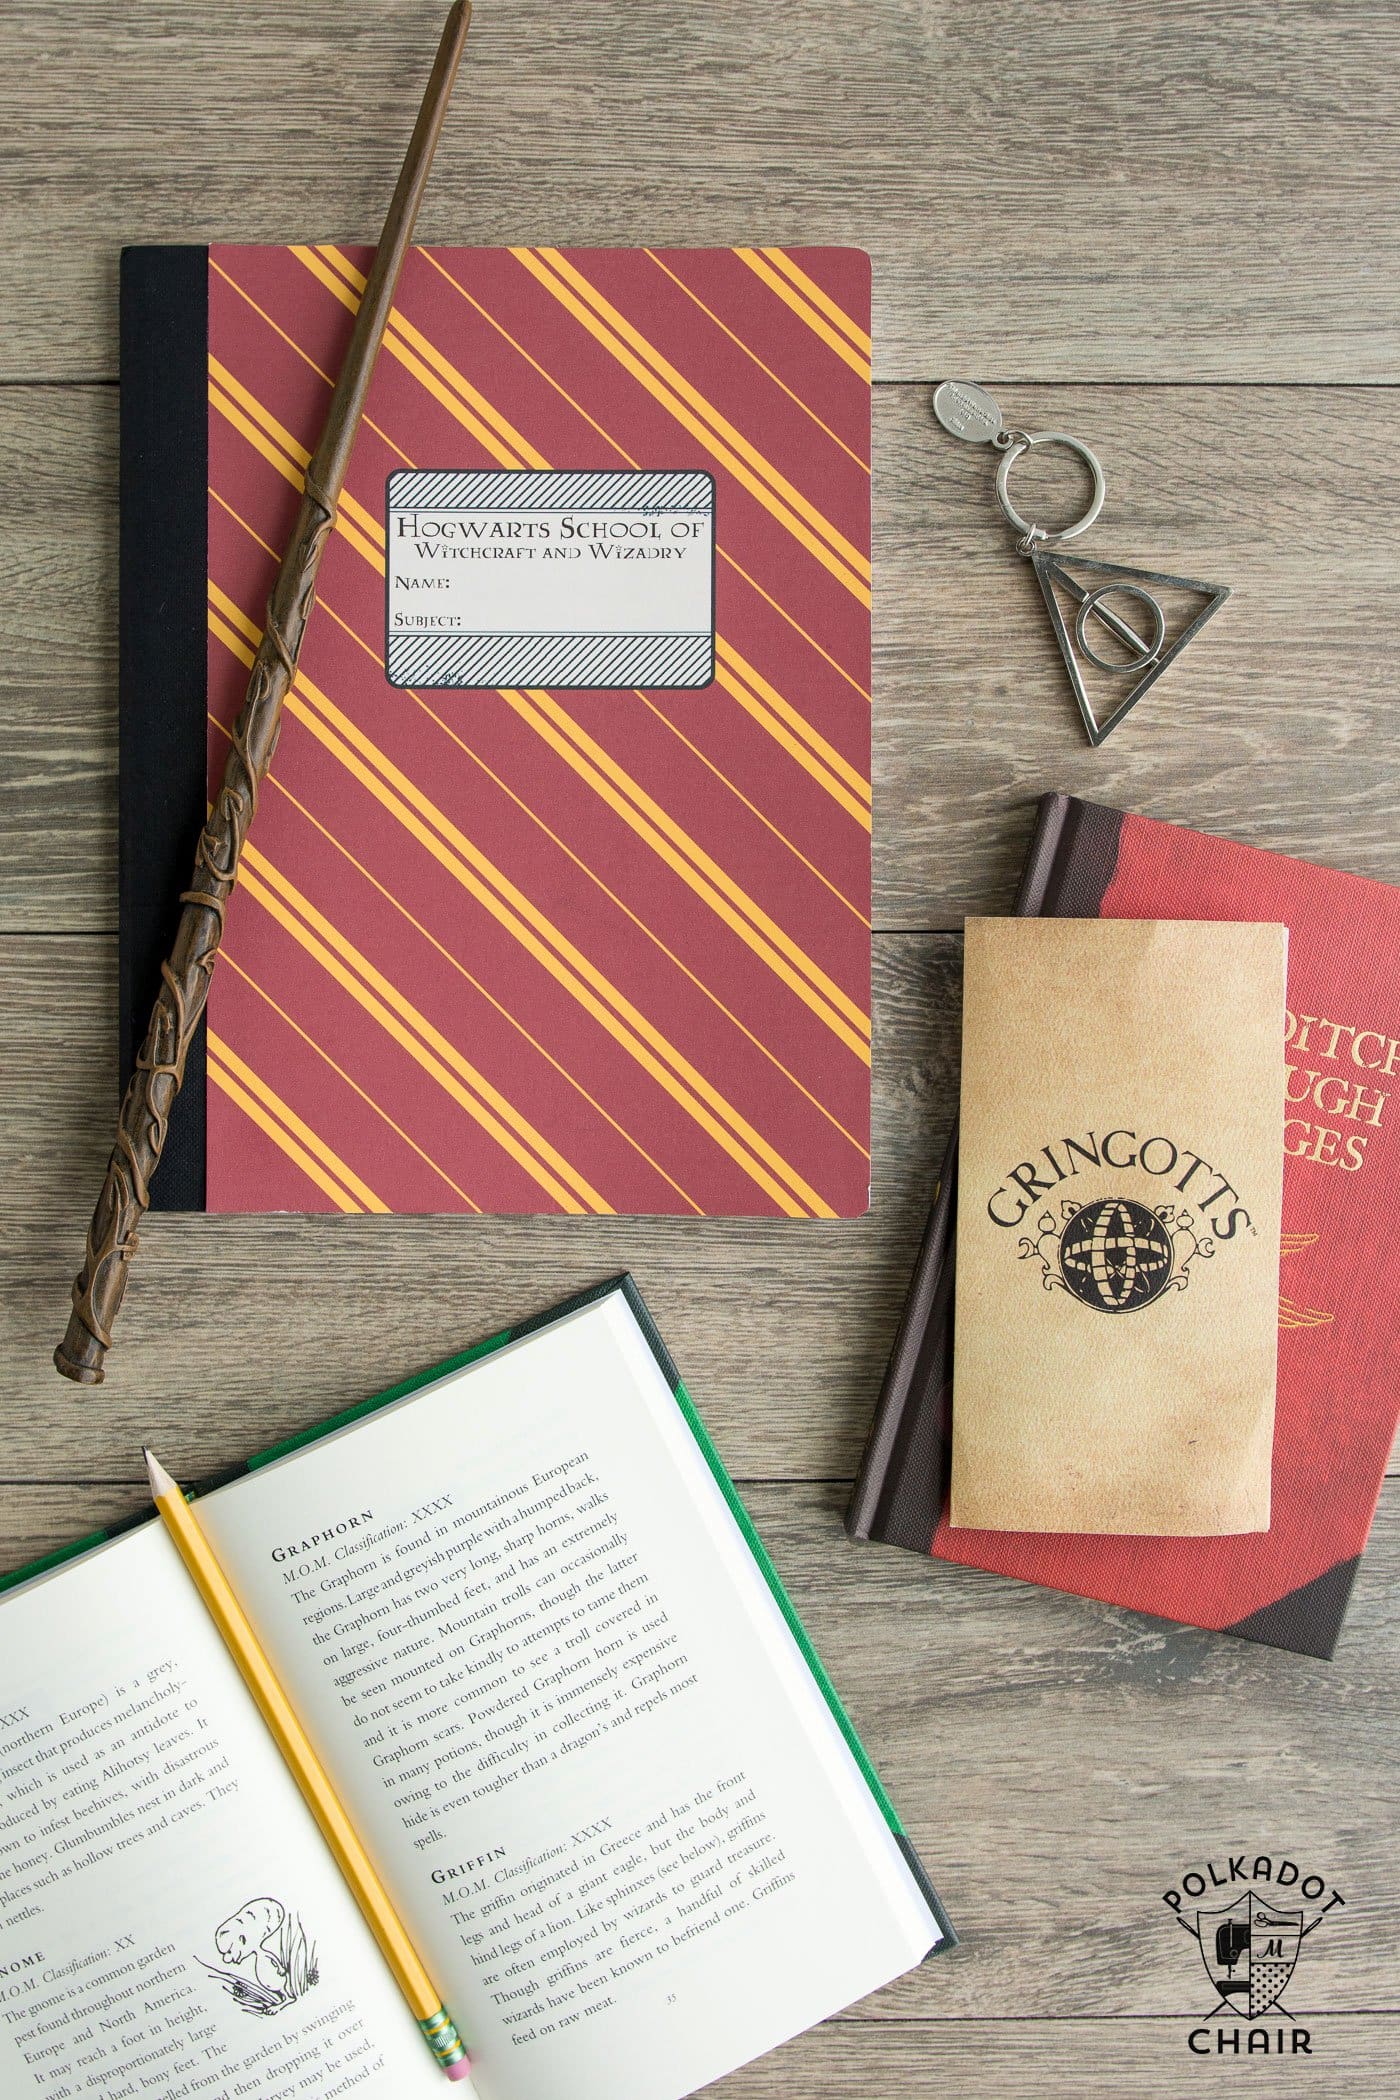 diy-hogwarts-inspired-house-notebooks-harry-potter-craft-idea-the-polka-dot-chair